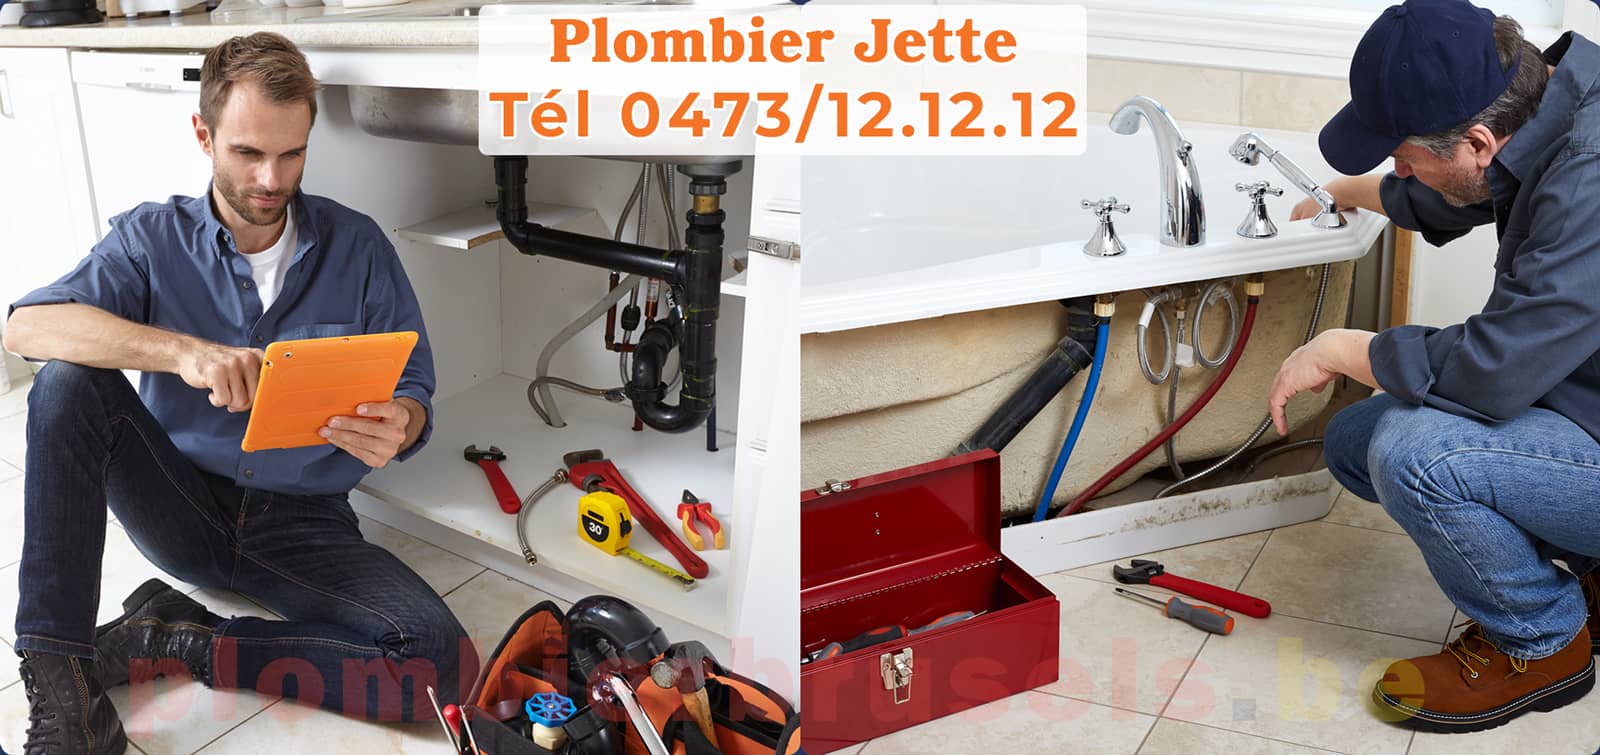 Plombier Jette service de Plomberie tél 0473/12.12.12